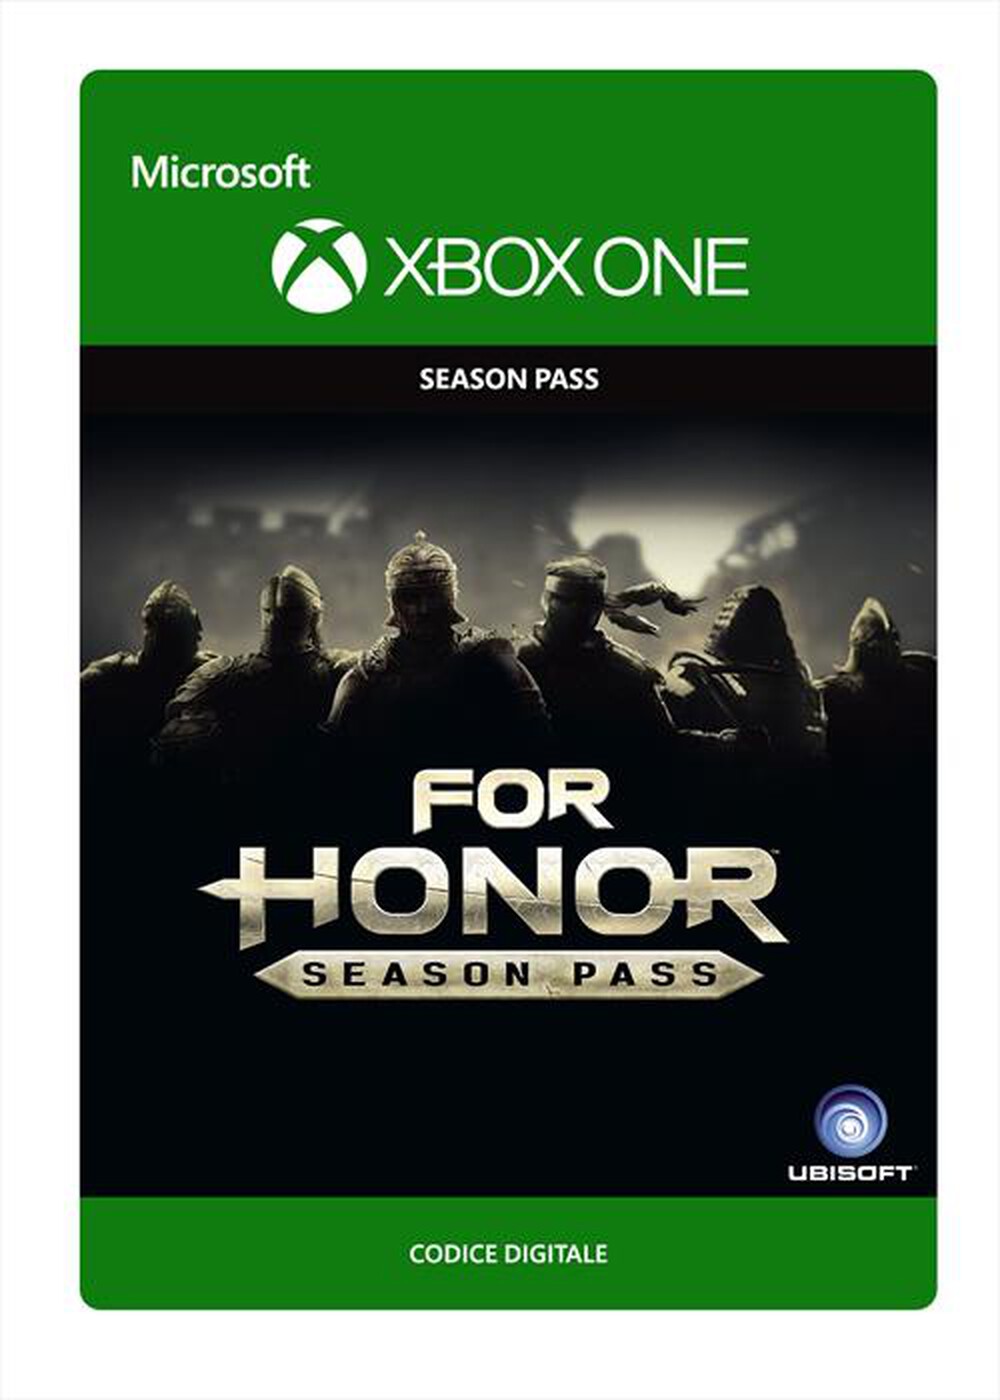 "MICROSOFT - For Honor: Season Pass - "